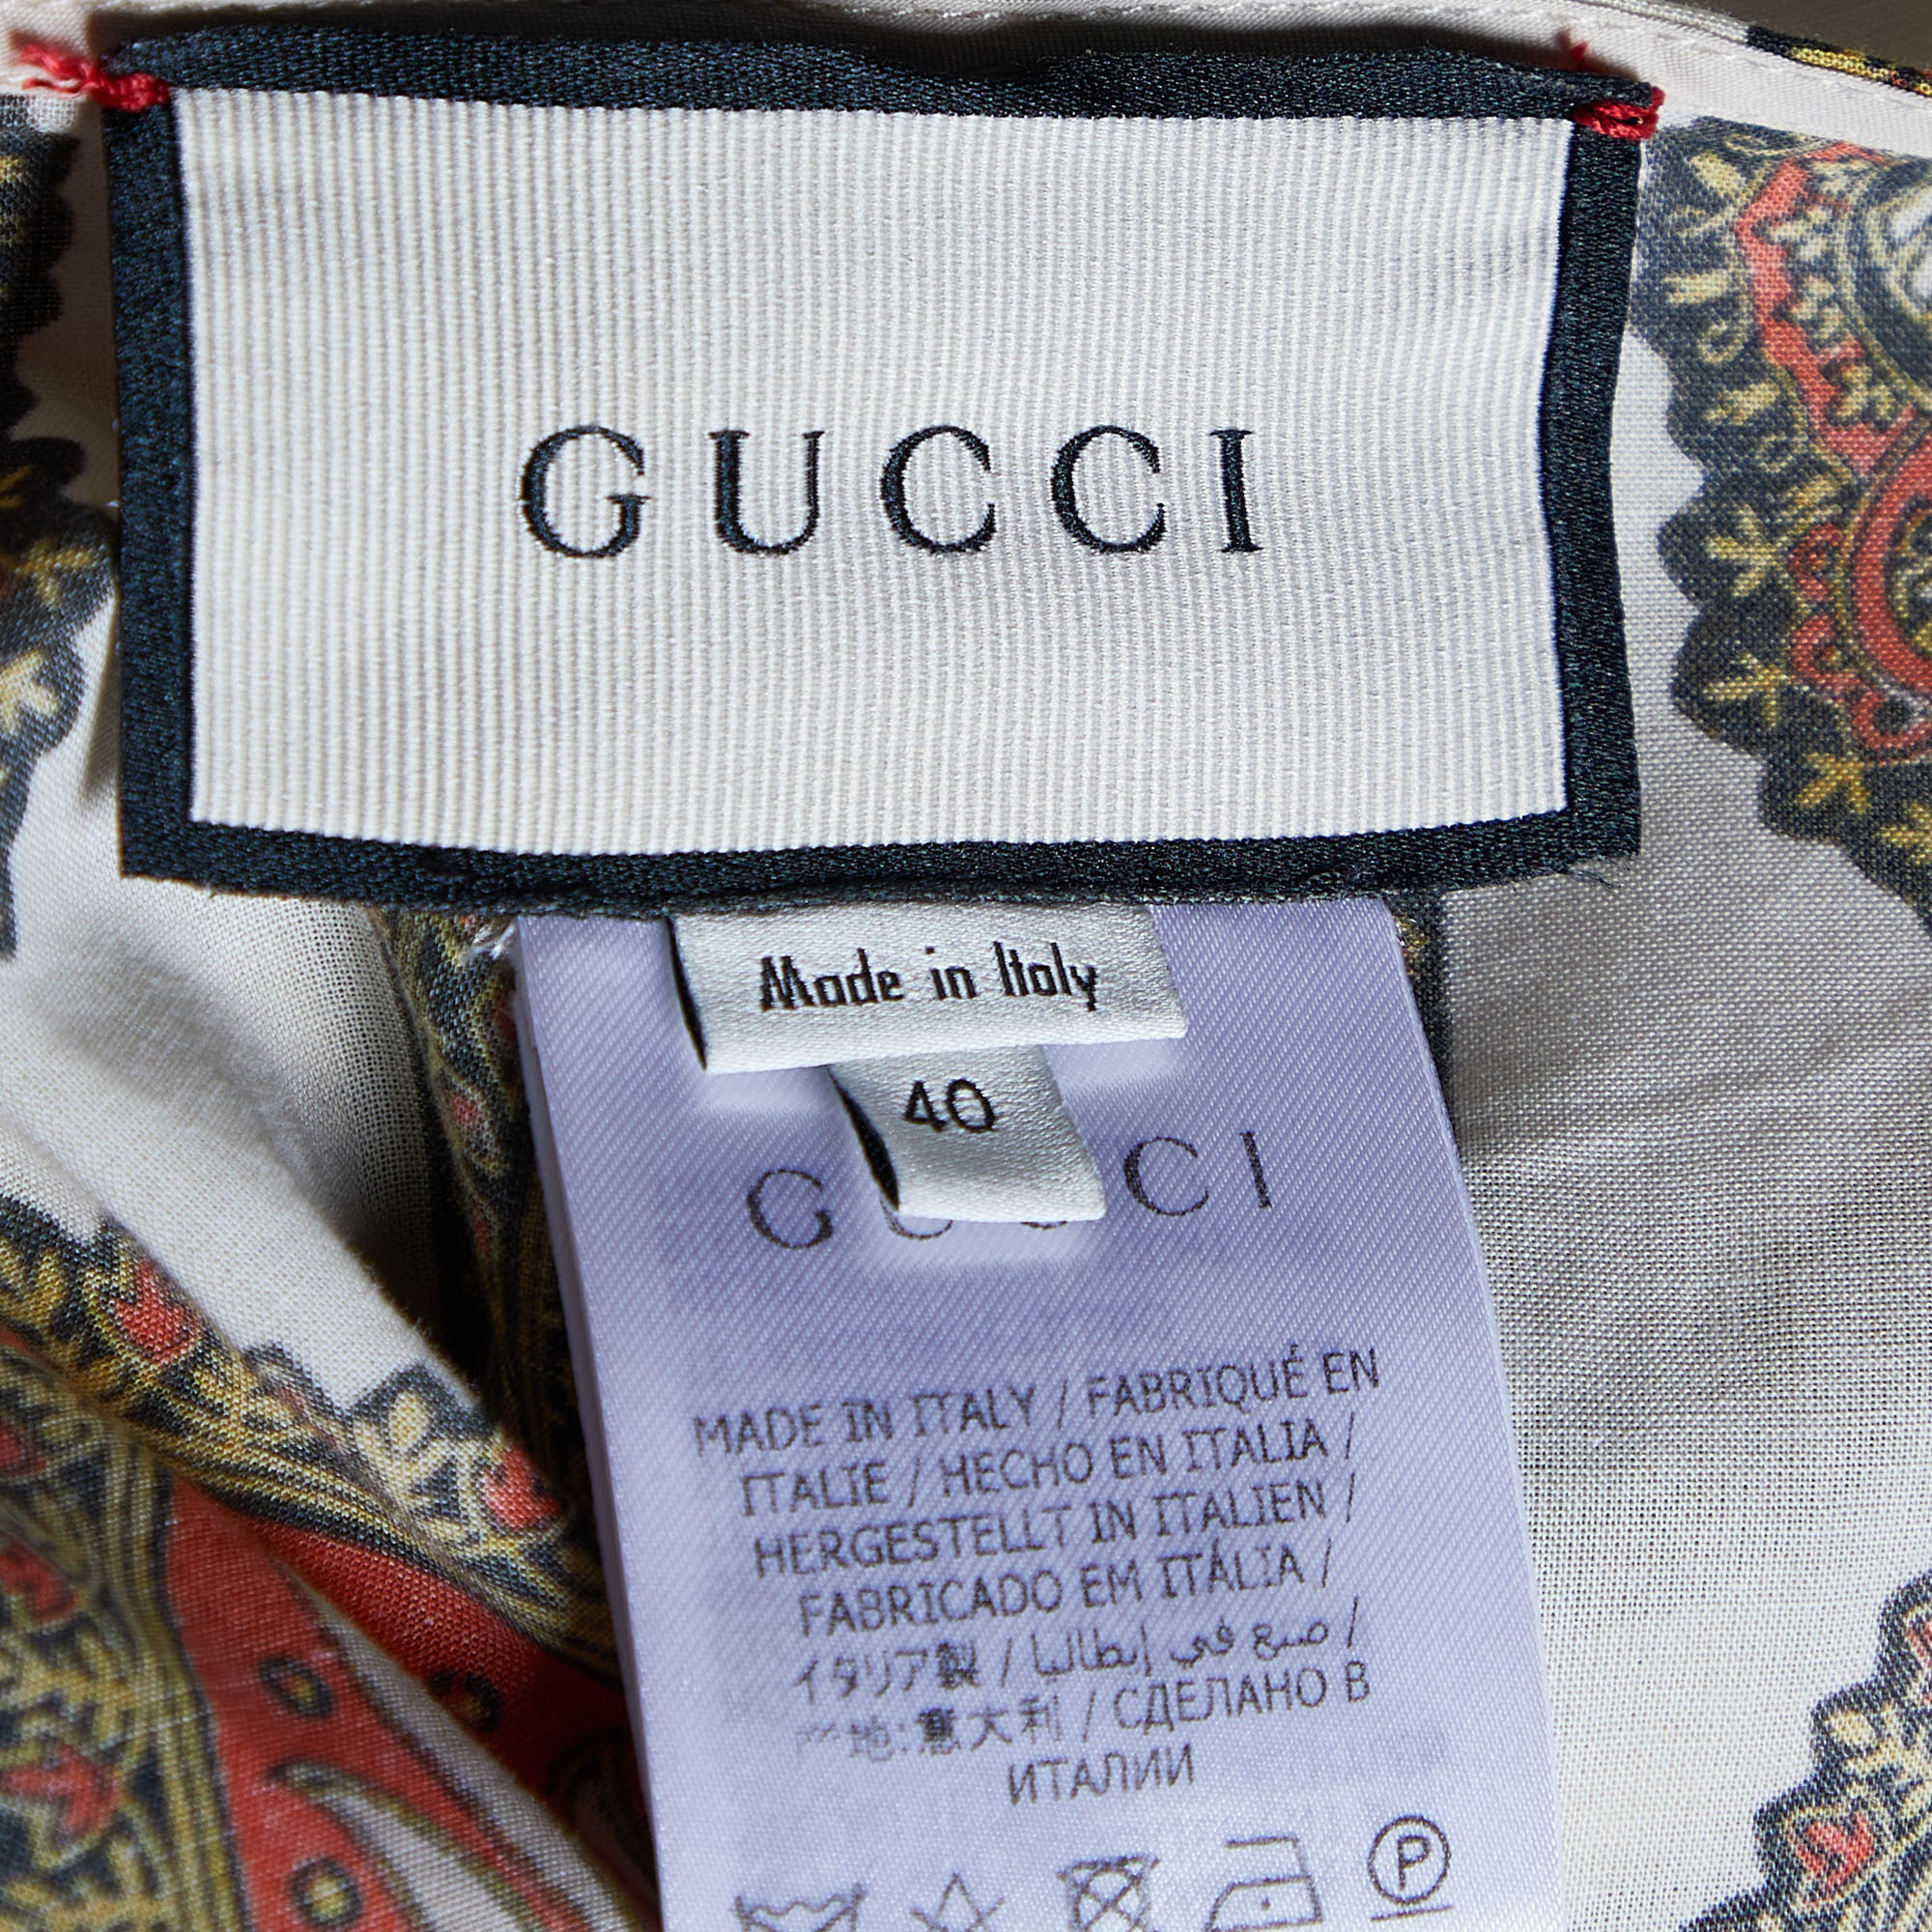 Gucci Cream Paisley Printed Cotton Kaftan Dress S